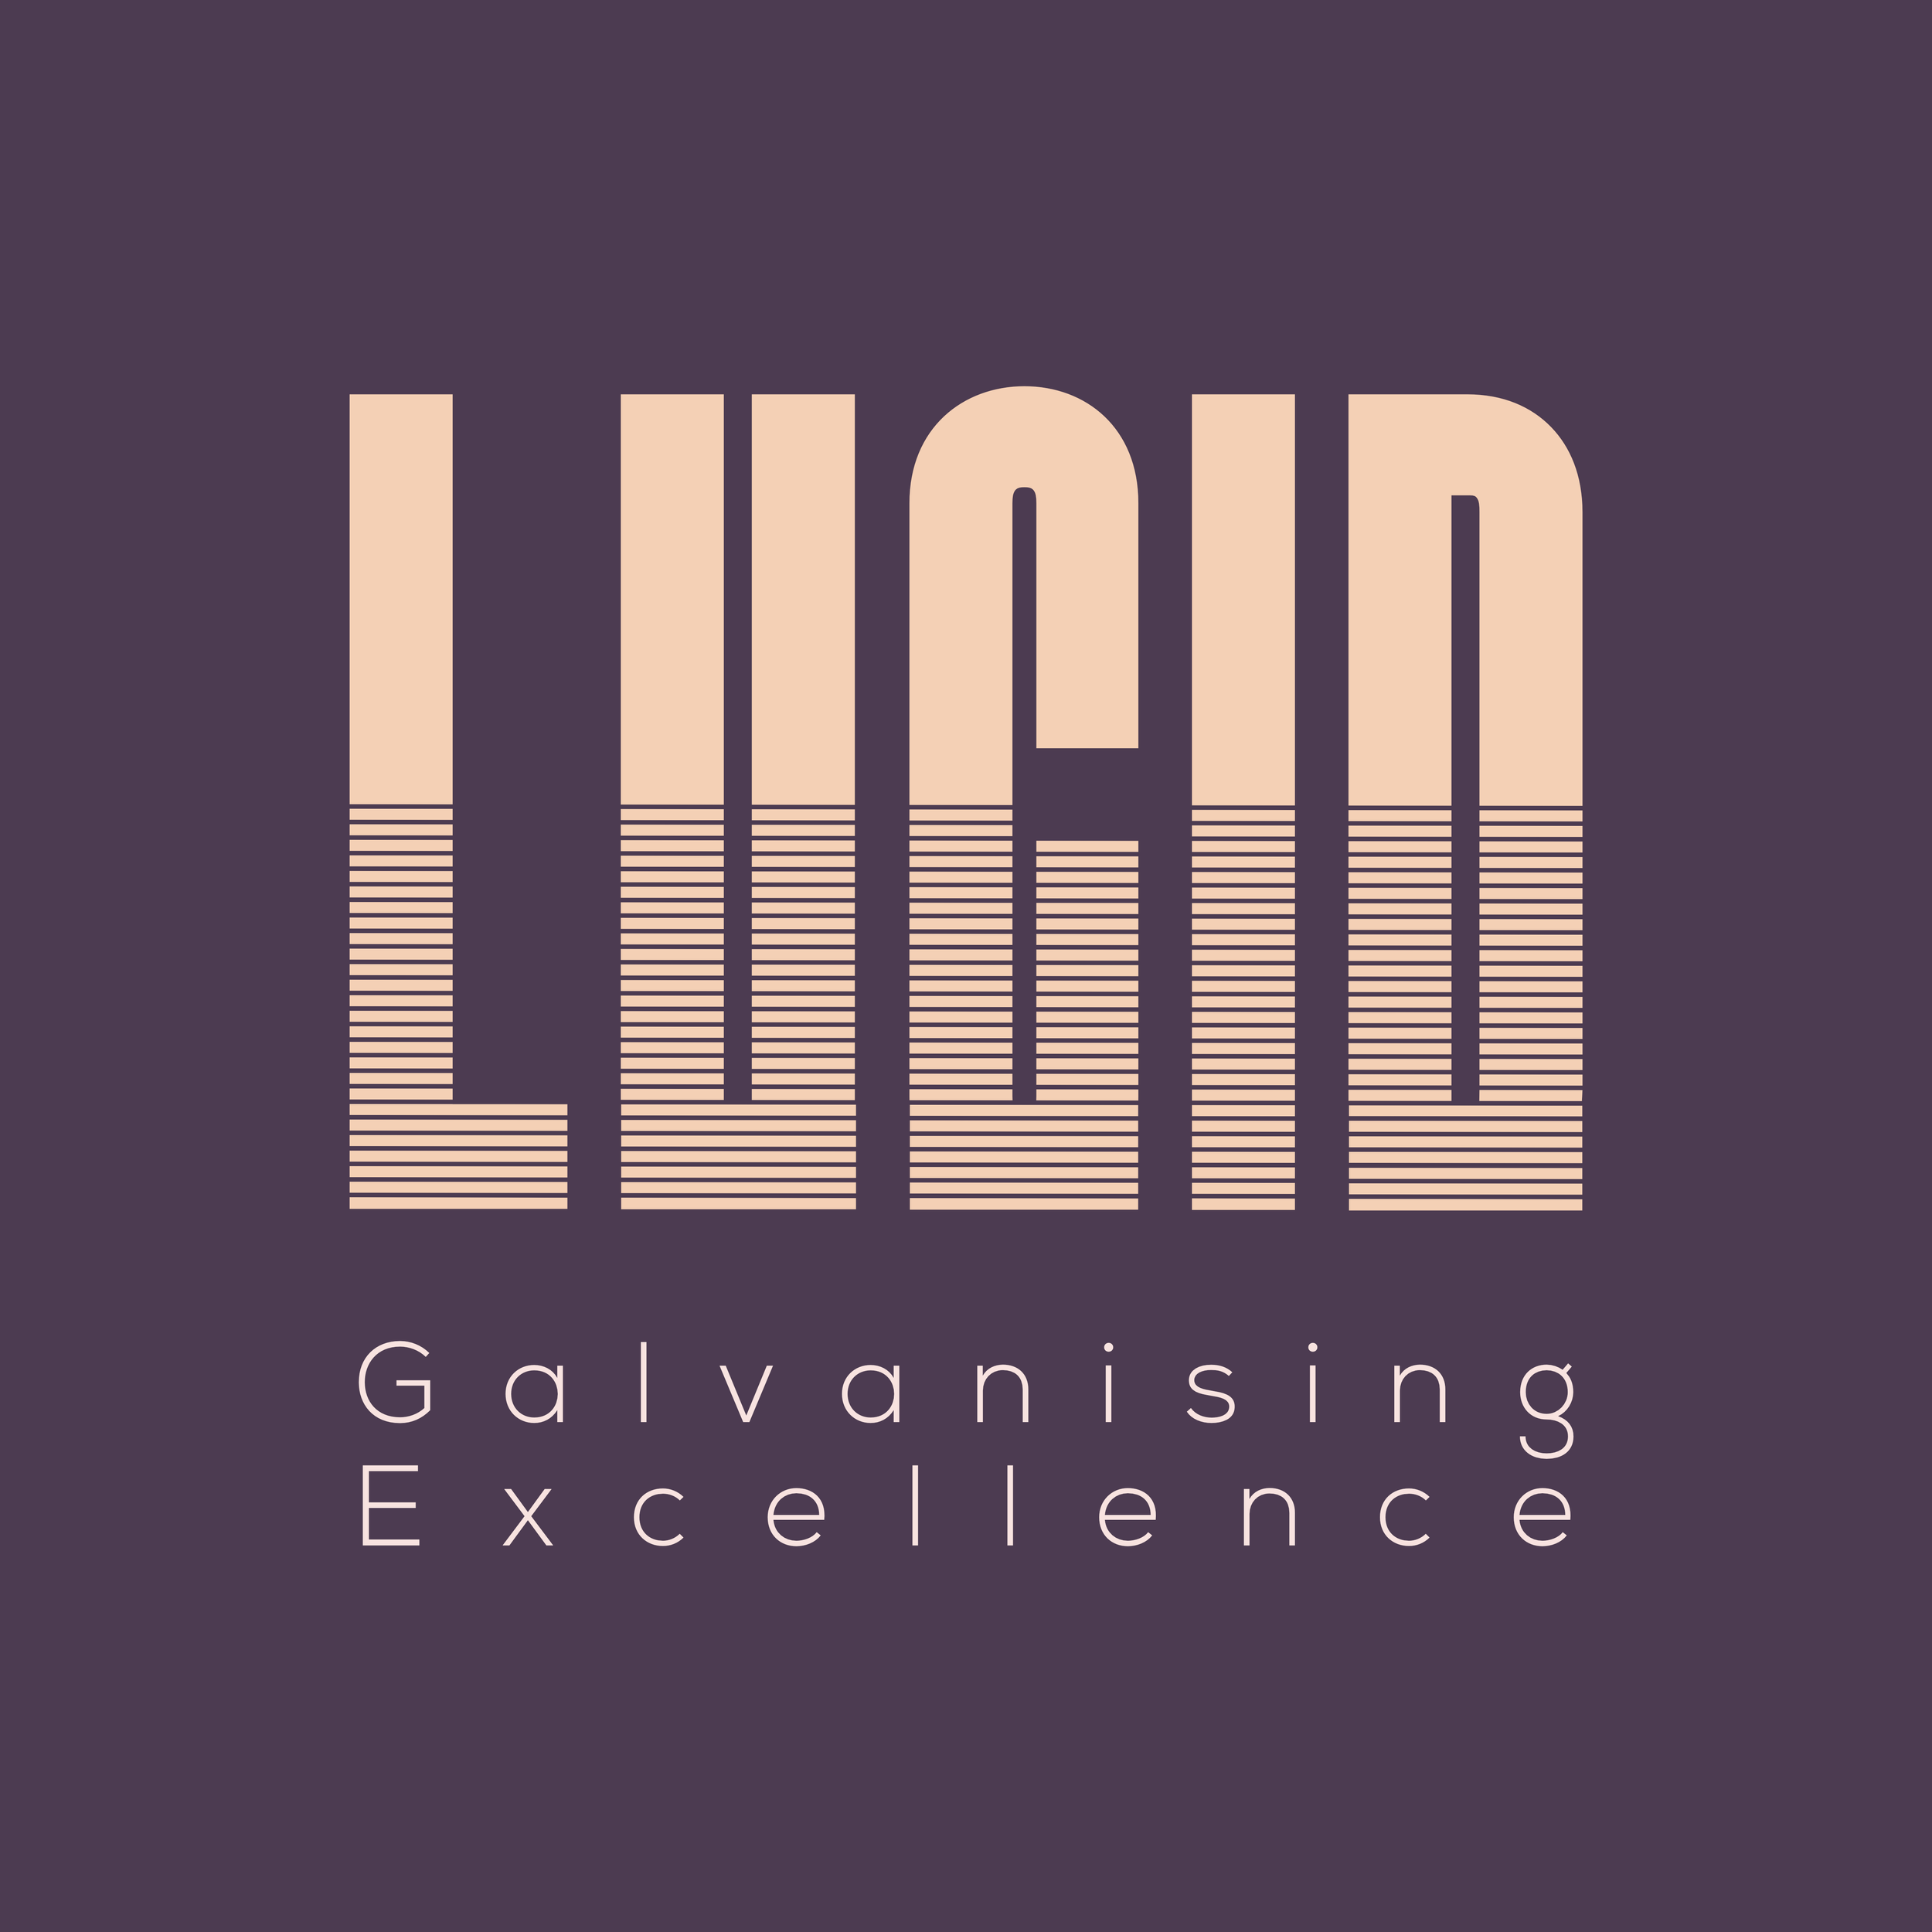 Order of service - Lucid - 1.png